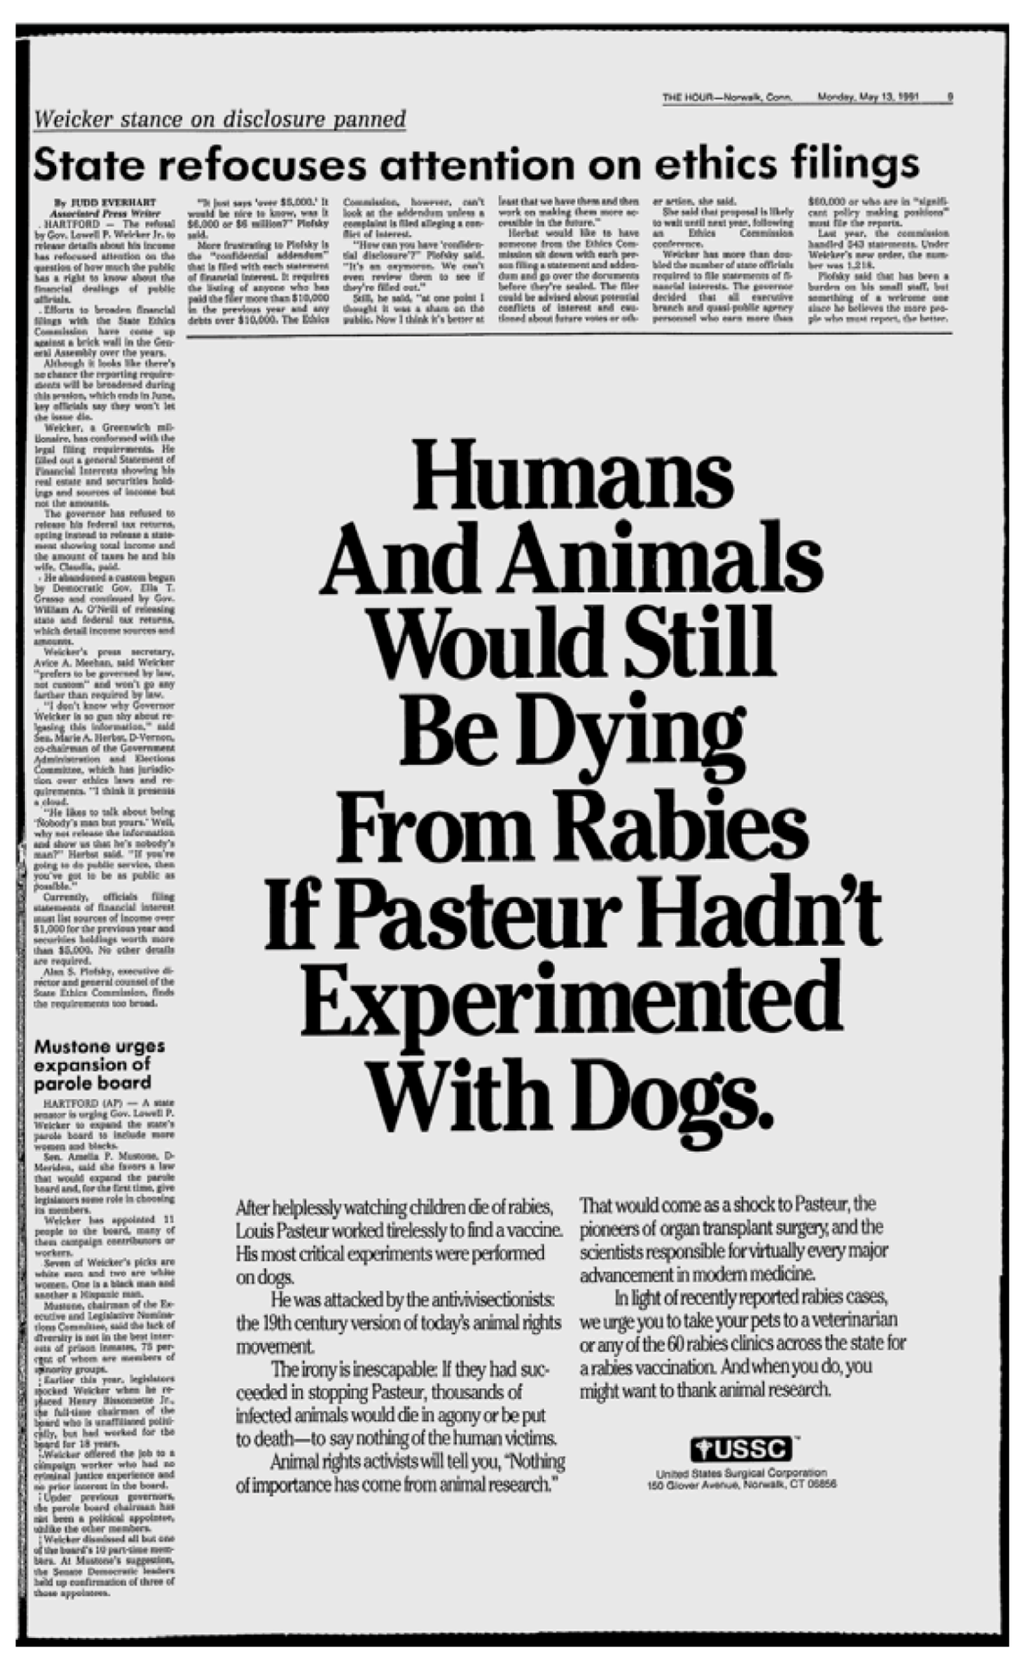 Humane Treatment of Animals